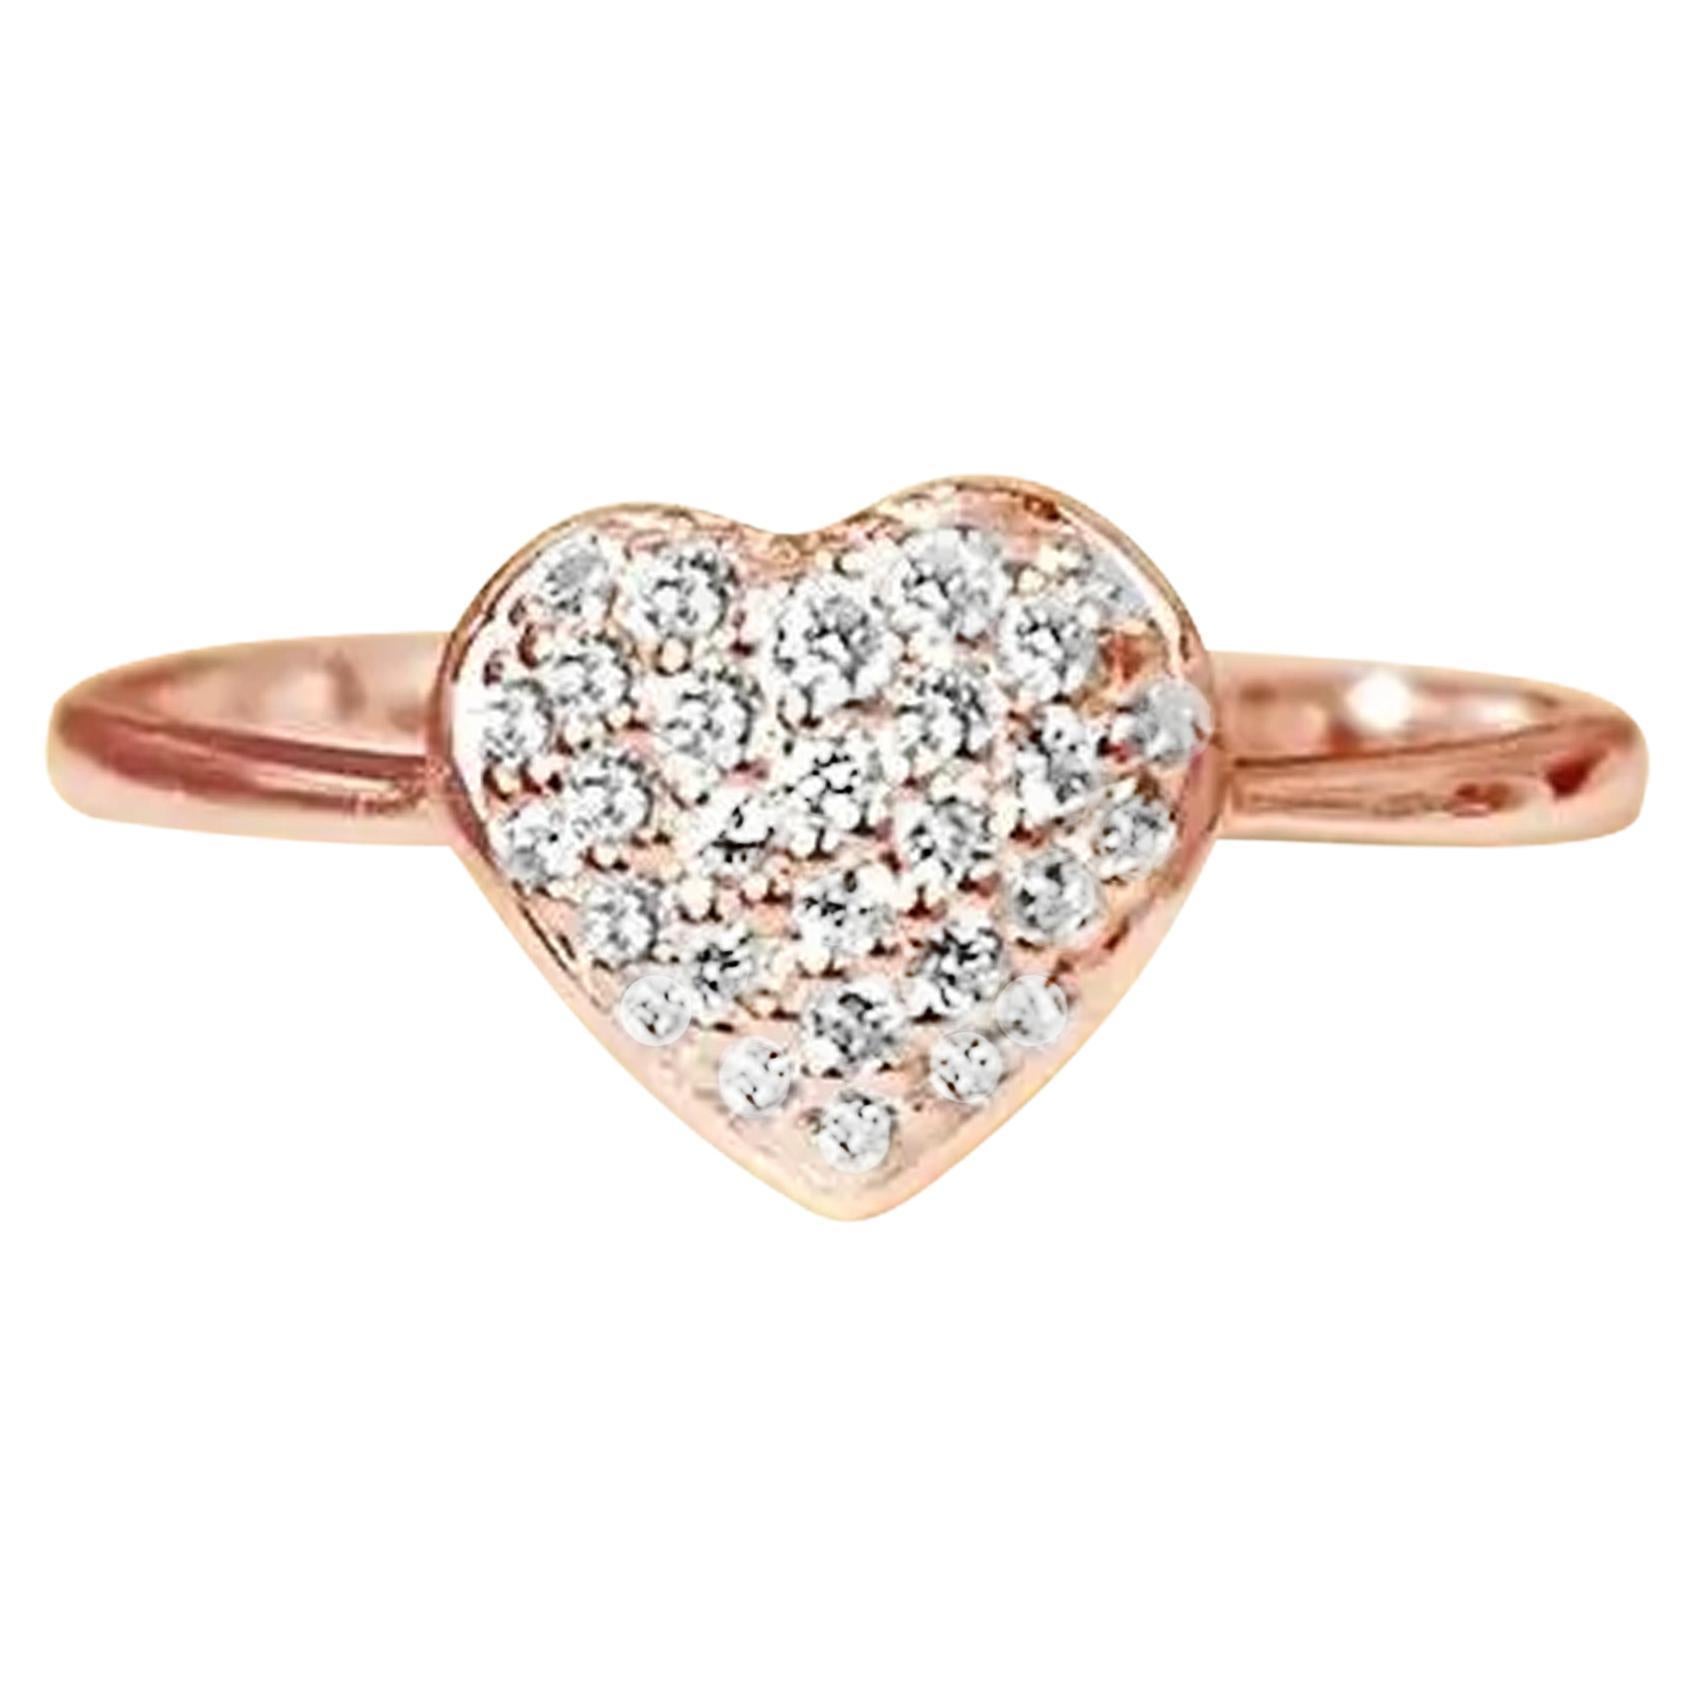 For Sale:  14k Gold Pave Heart Ring Diamond Heart Ring Heart Ring Engagement Gift